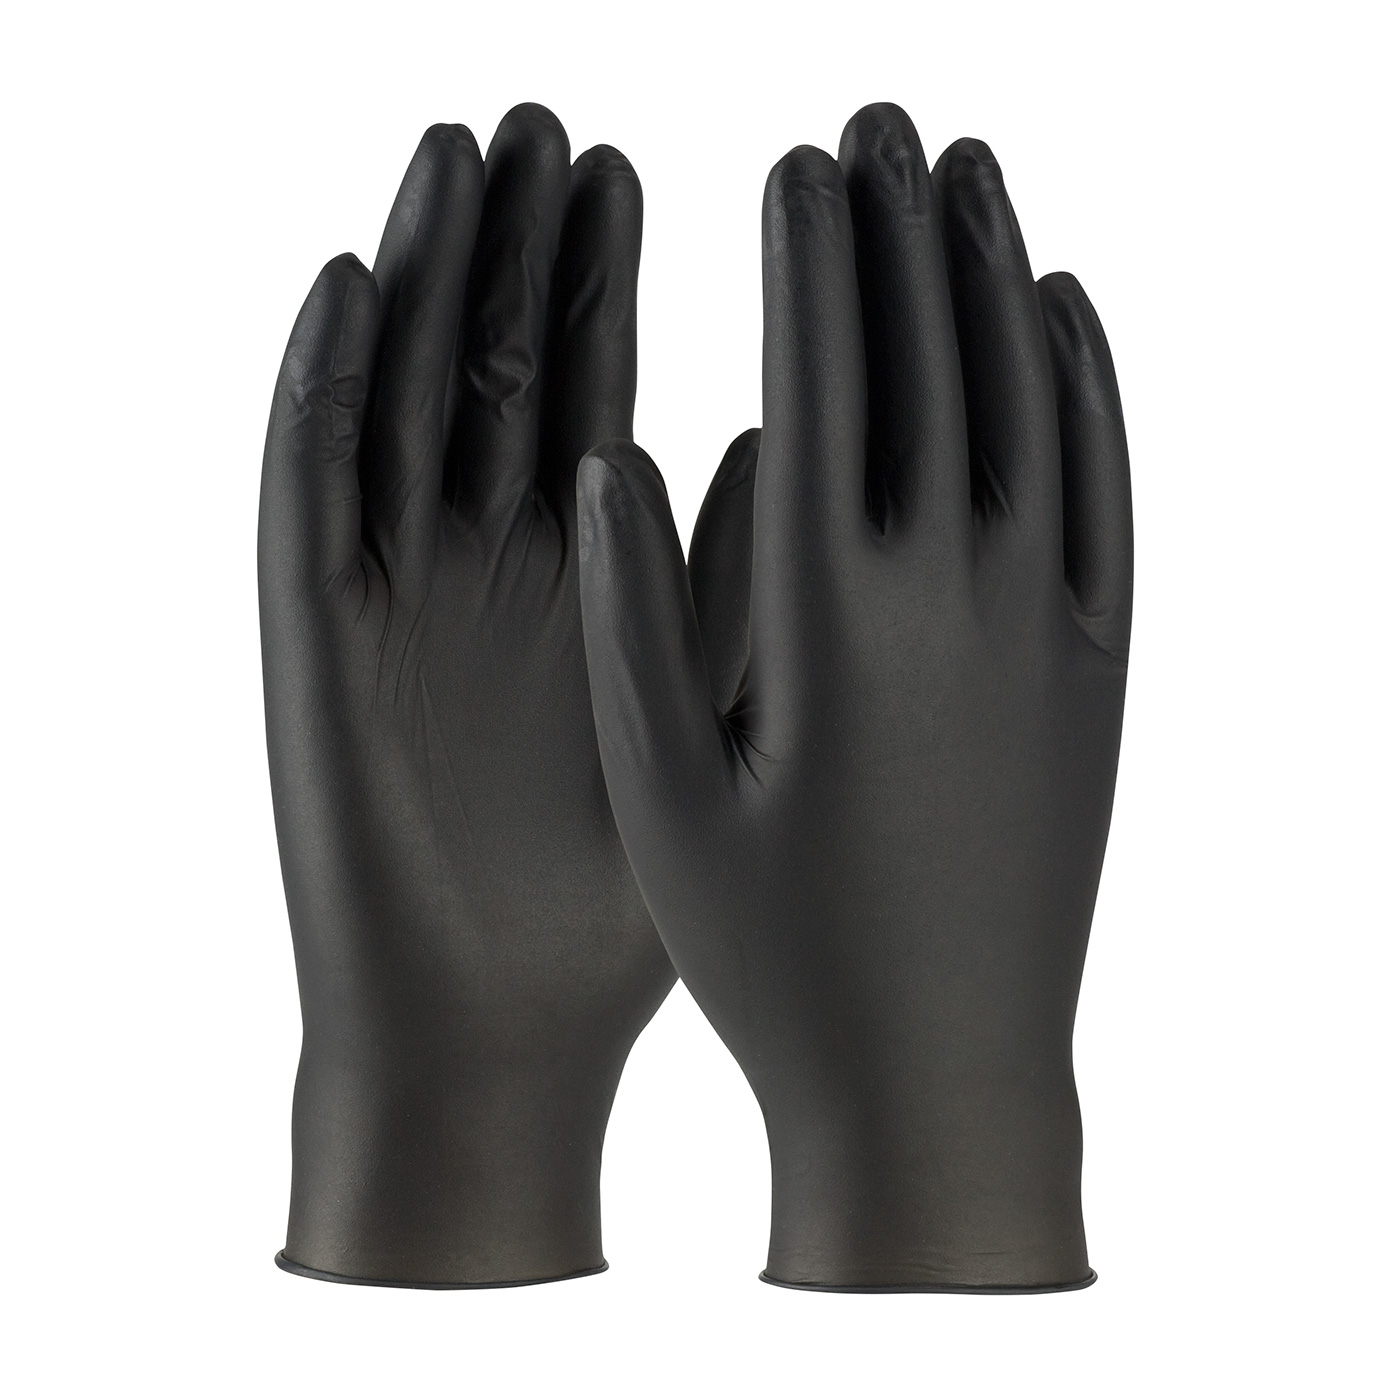 #63-632PF PIP® Ambi-dex® Axle Disposable Black Nitrile Glove, Powder-Free with Textured Grip - 4 mil

